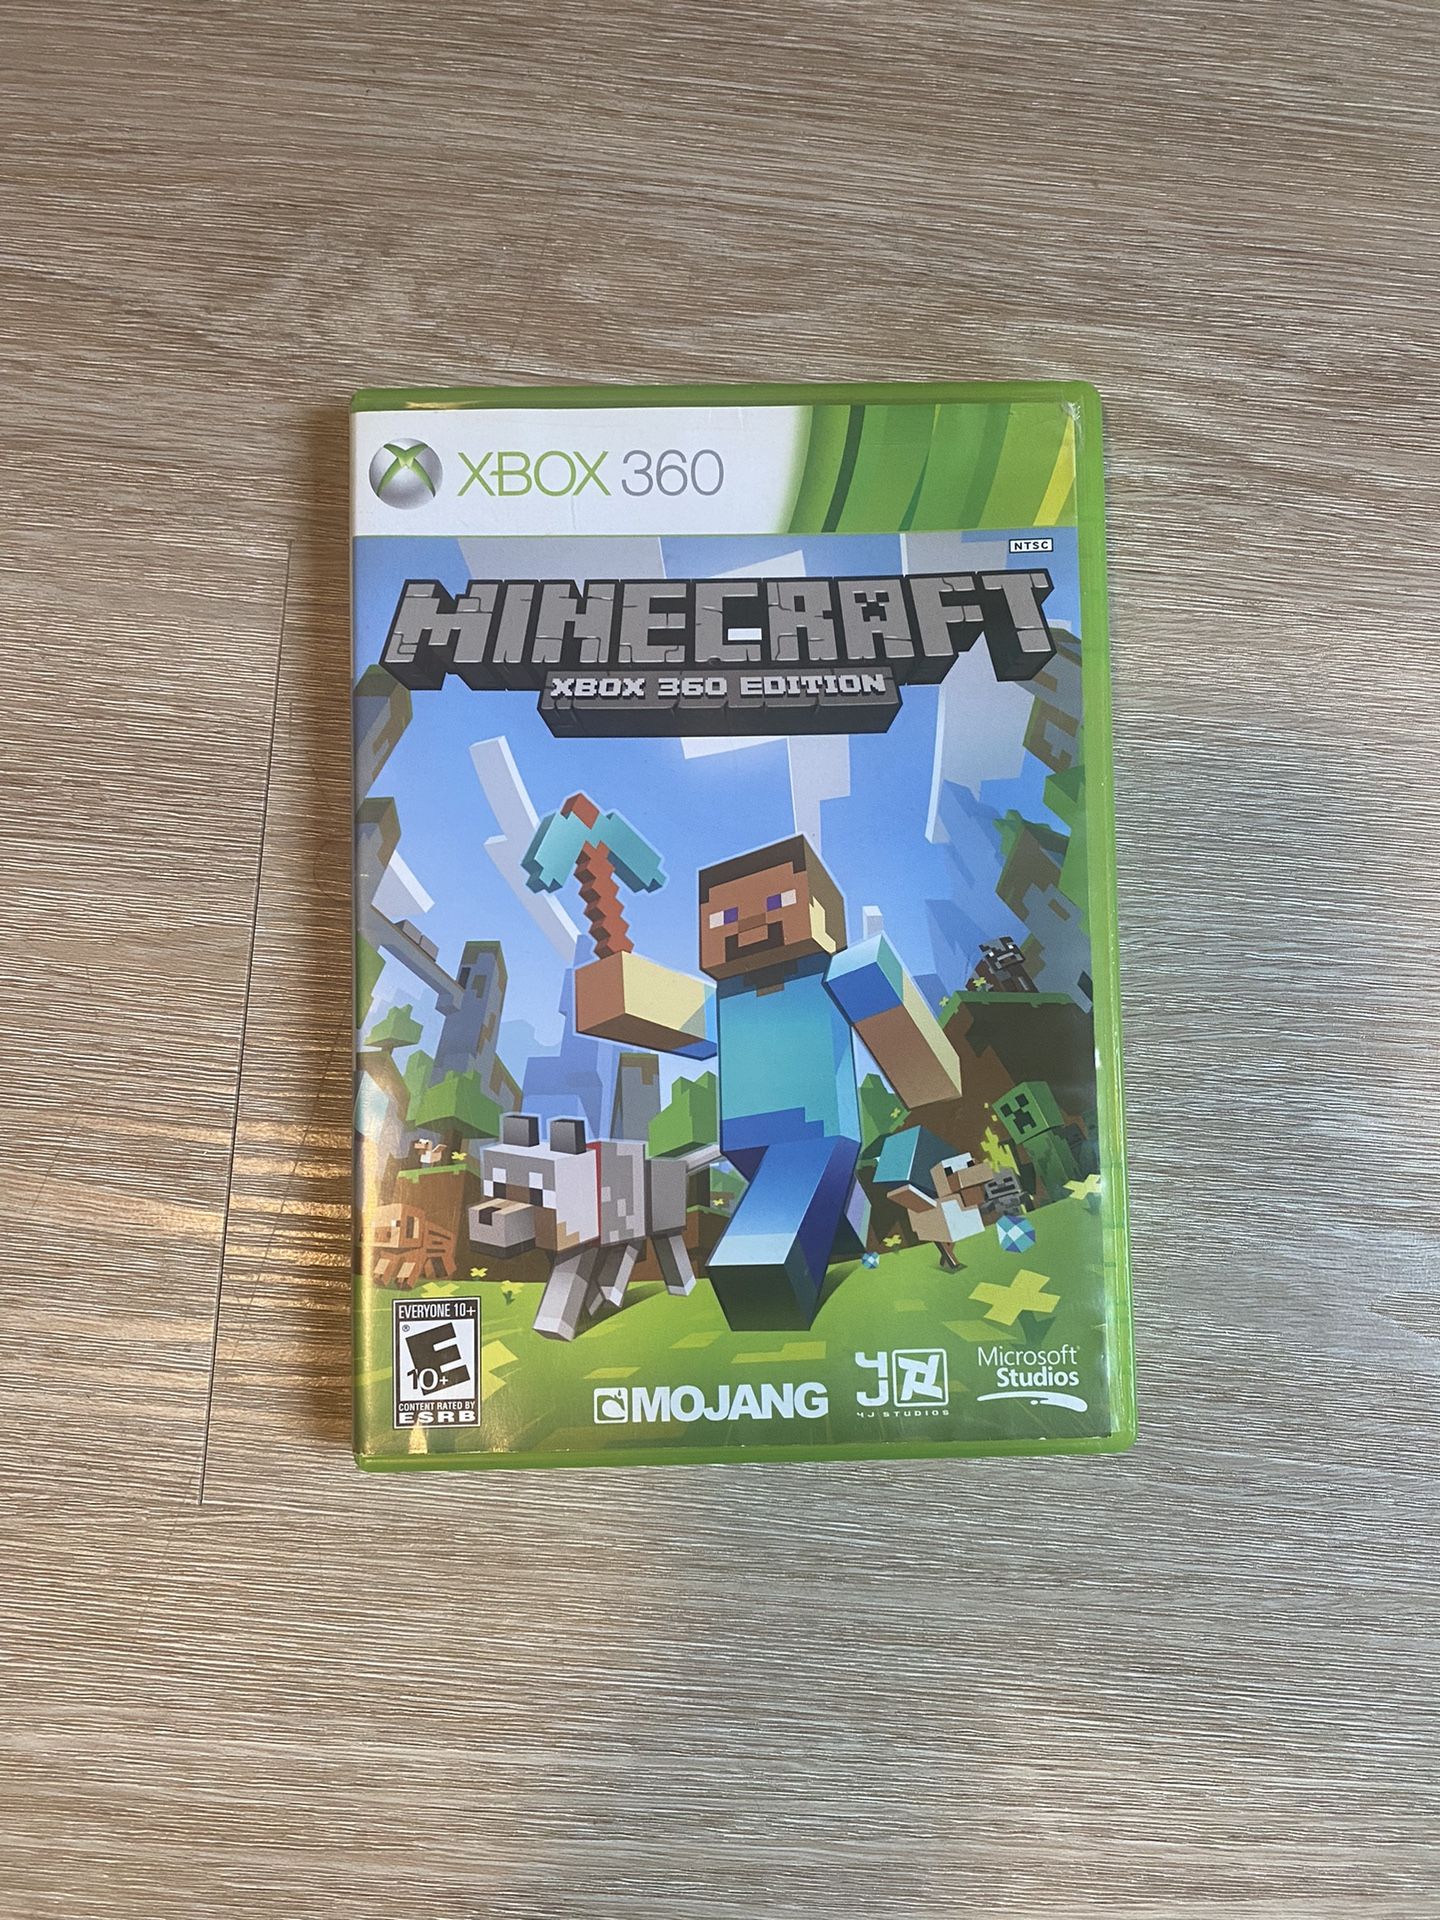 Minecraft (Microsoft Xbox 360, 2013) Game & Case